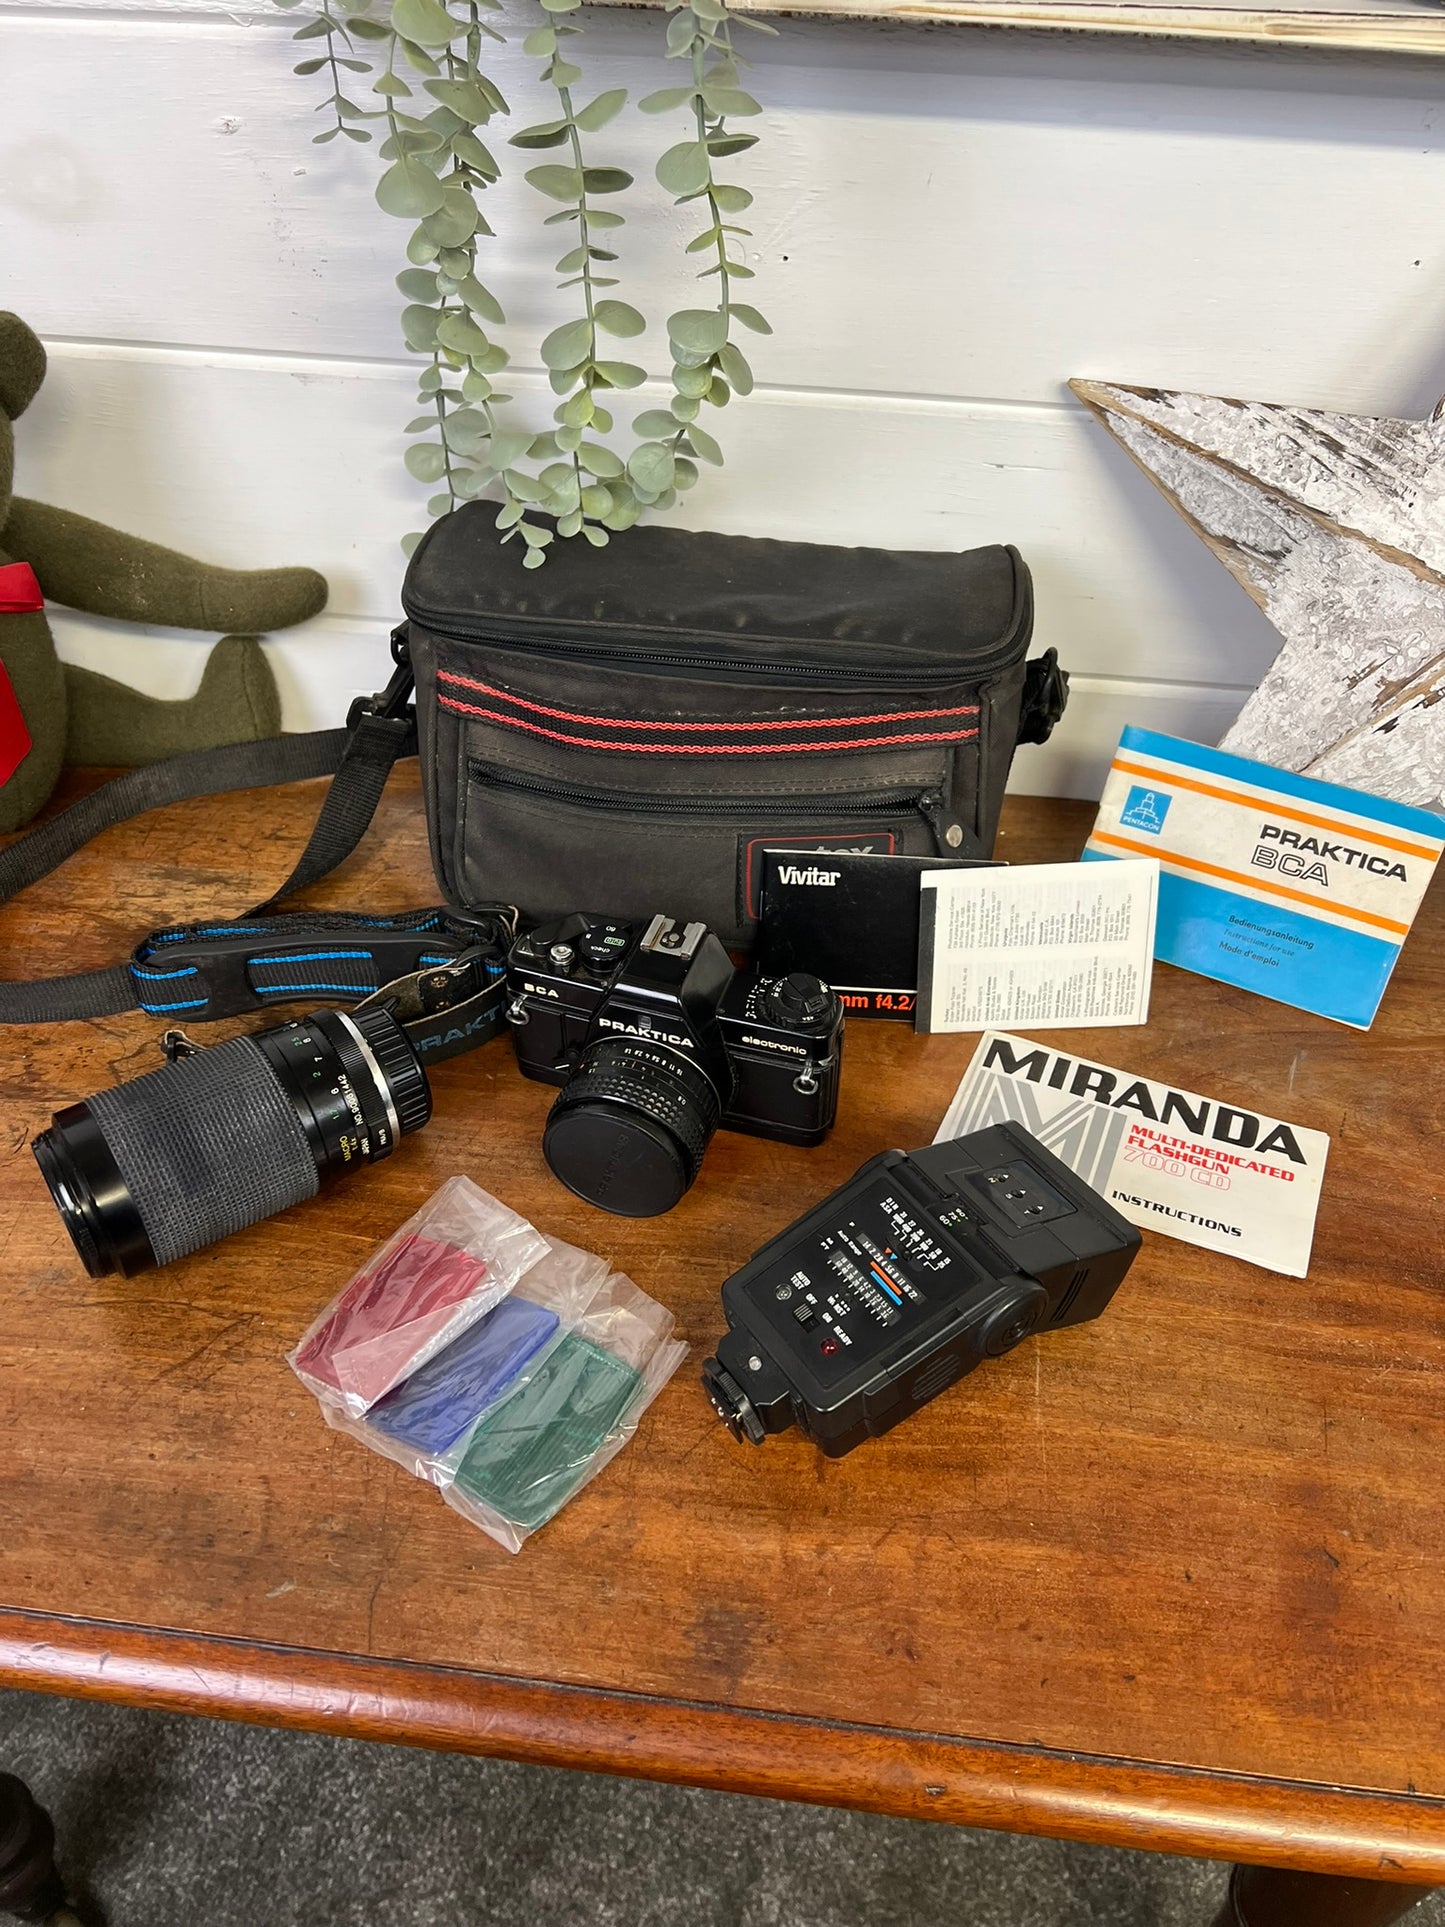 Vintage Camera Bundle Praktica BCA Electronic Camera 2x Lenses & Miranda 700CD Flash